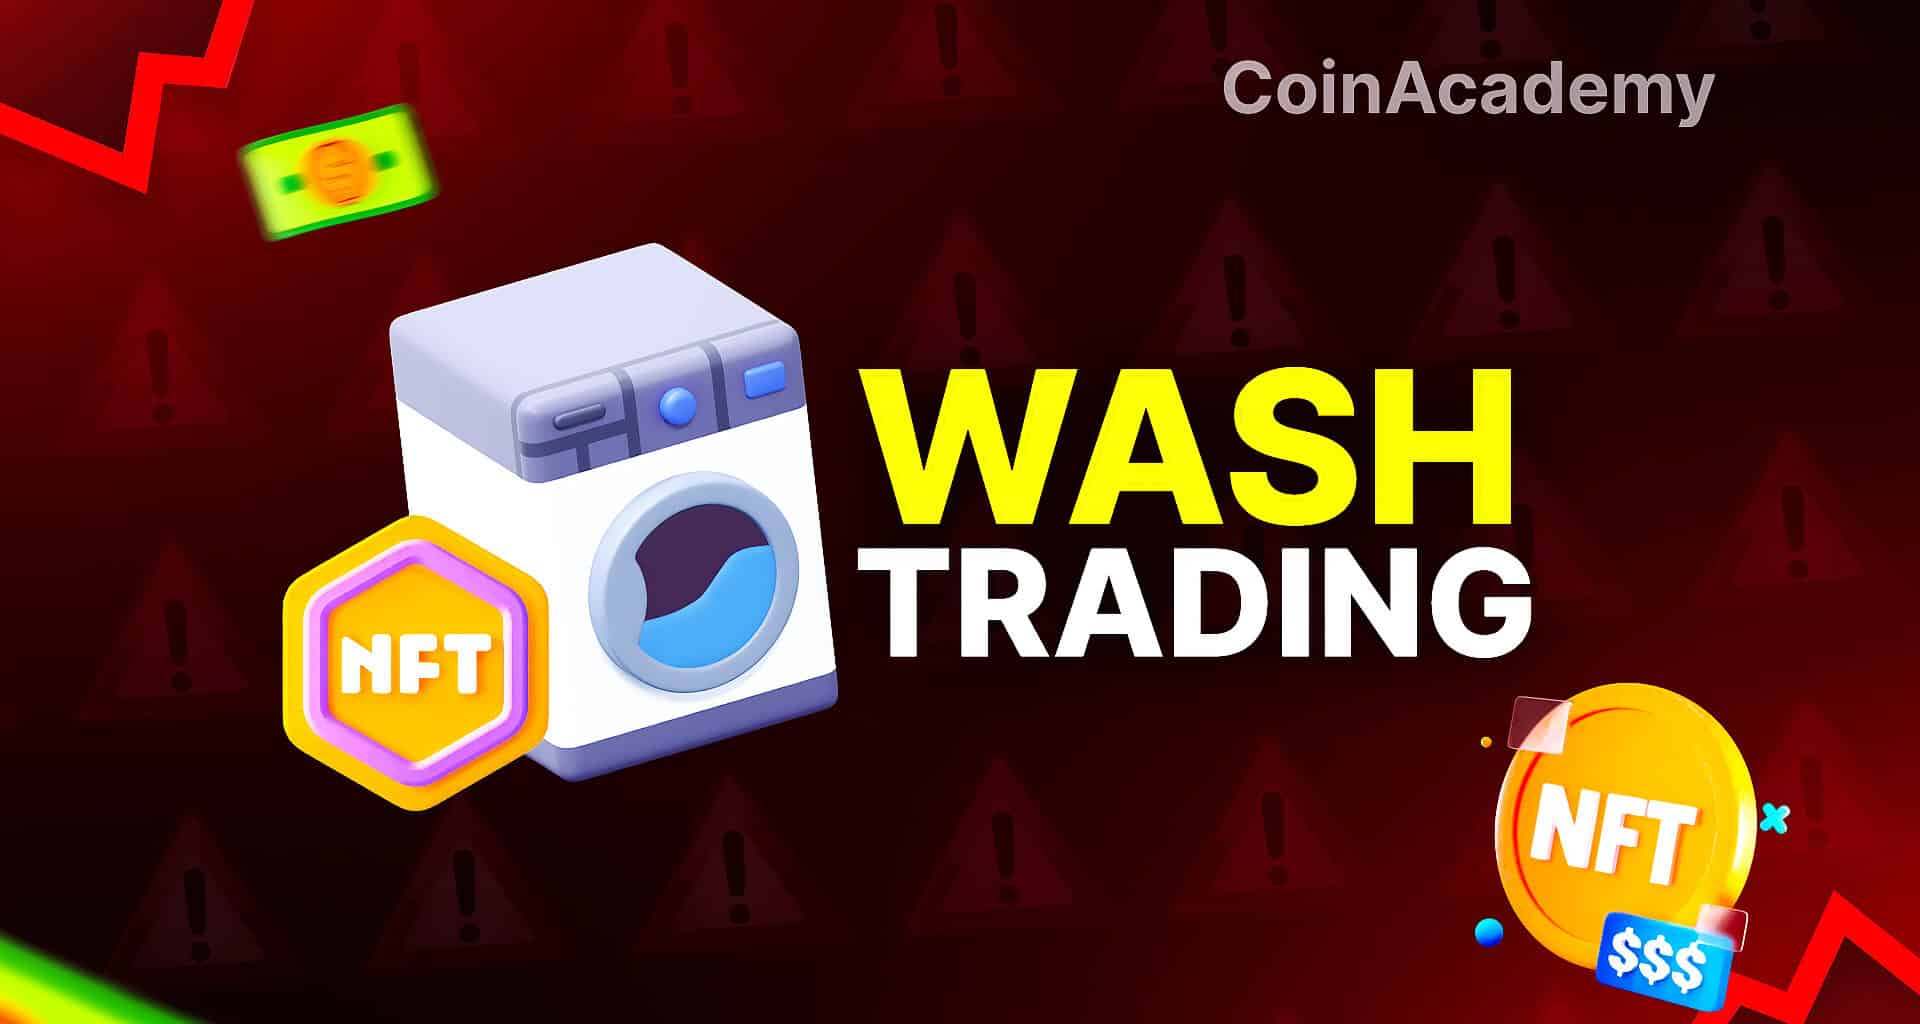 Wash trading nft